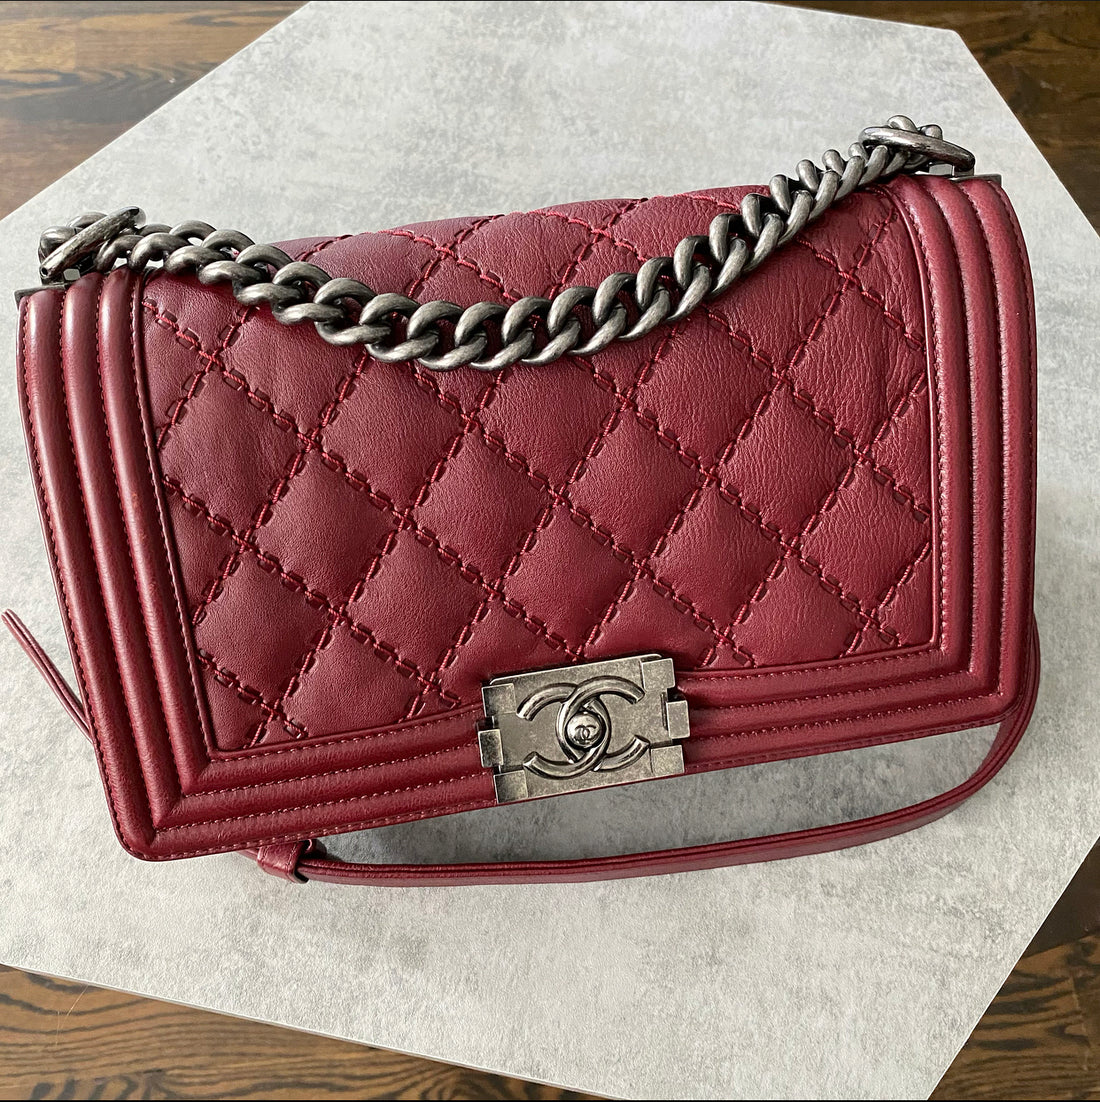 Chanel Burgundy Medium Double Stitch Le Boy Bag – I MISS YOU VINTAGE